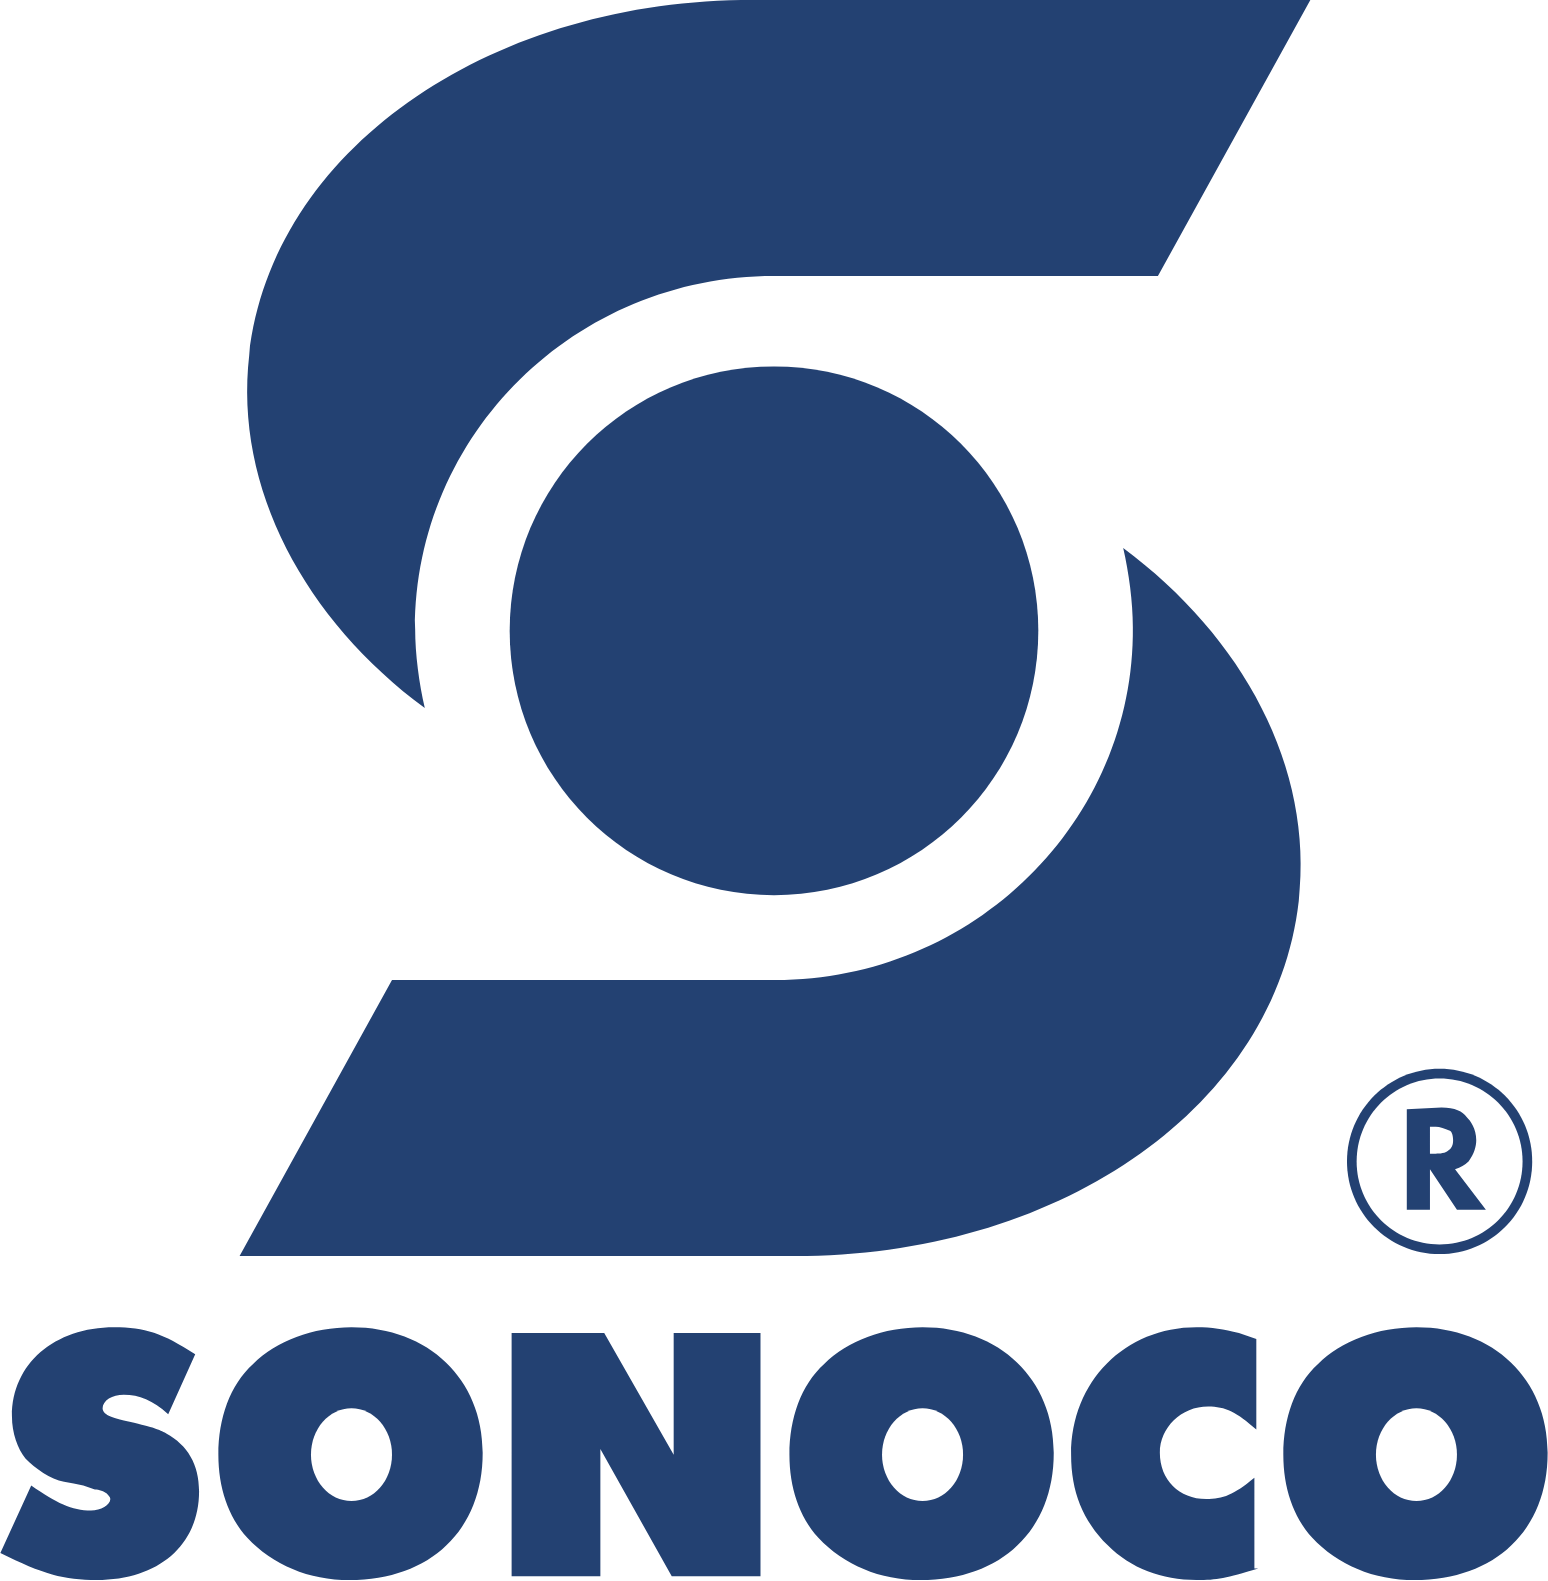 Sonoco logo large (transparent PNG)